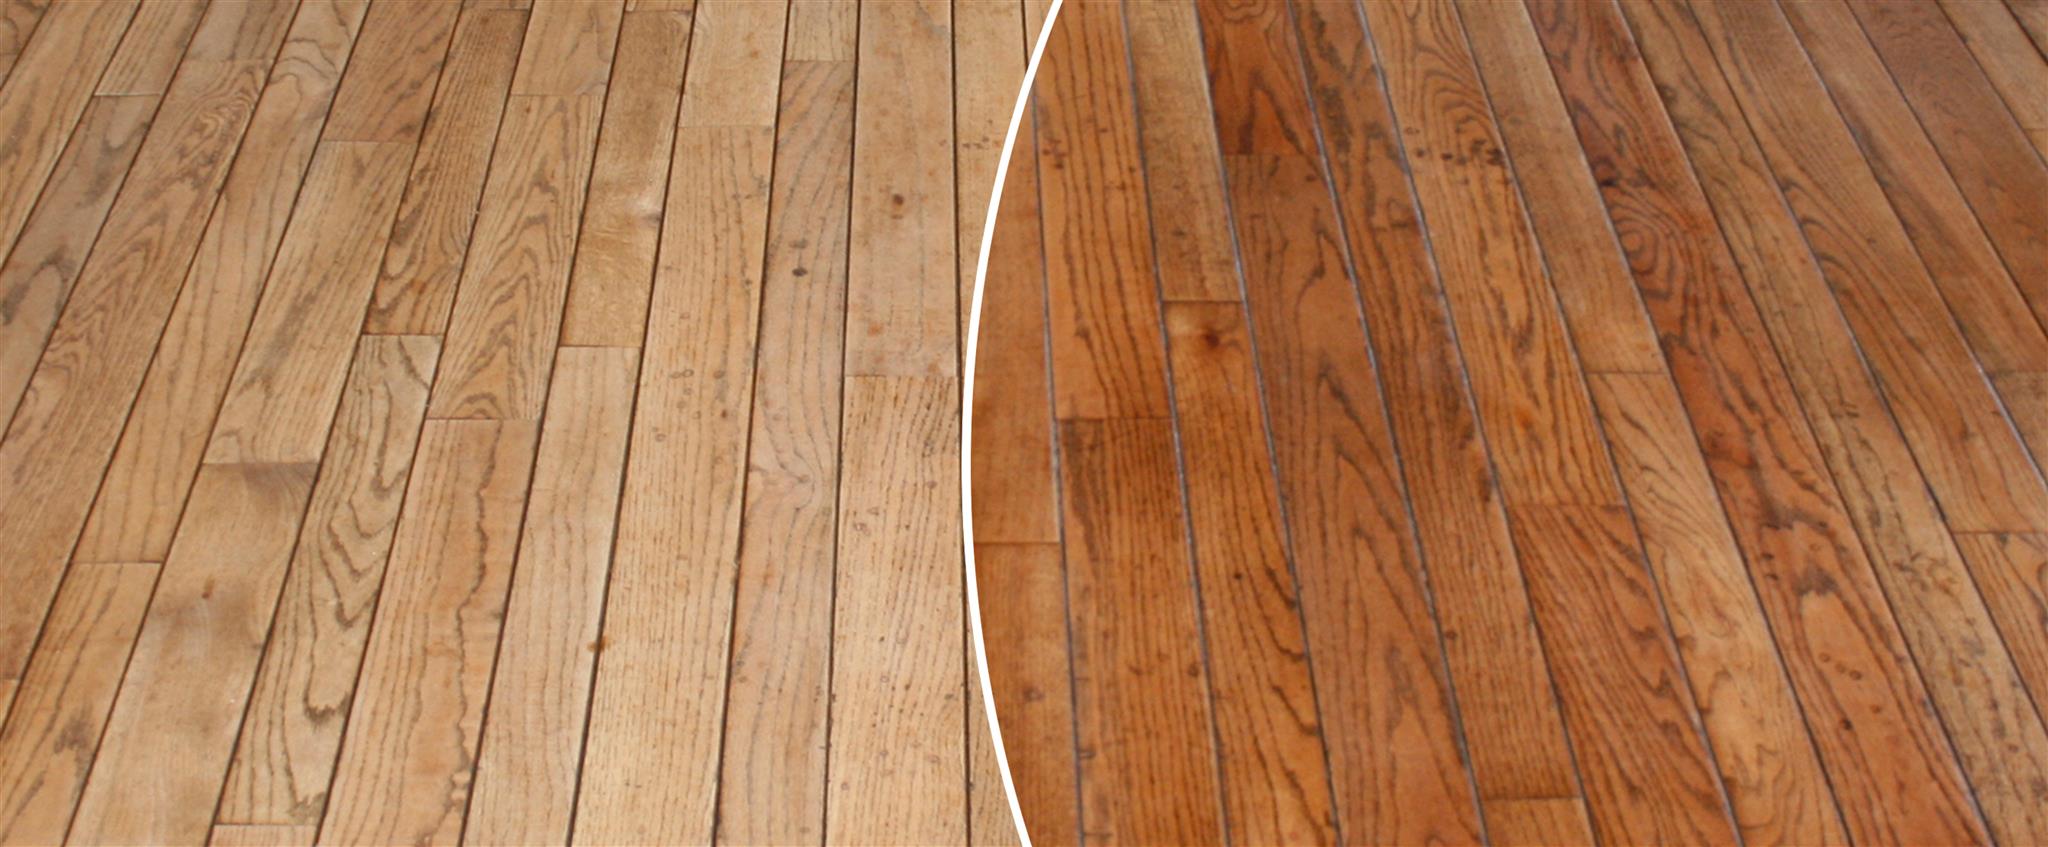 Wood Floor Refinishing Services N Hance, Hardwood Floor Refinishing Torrance Ca